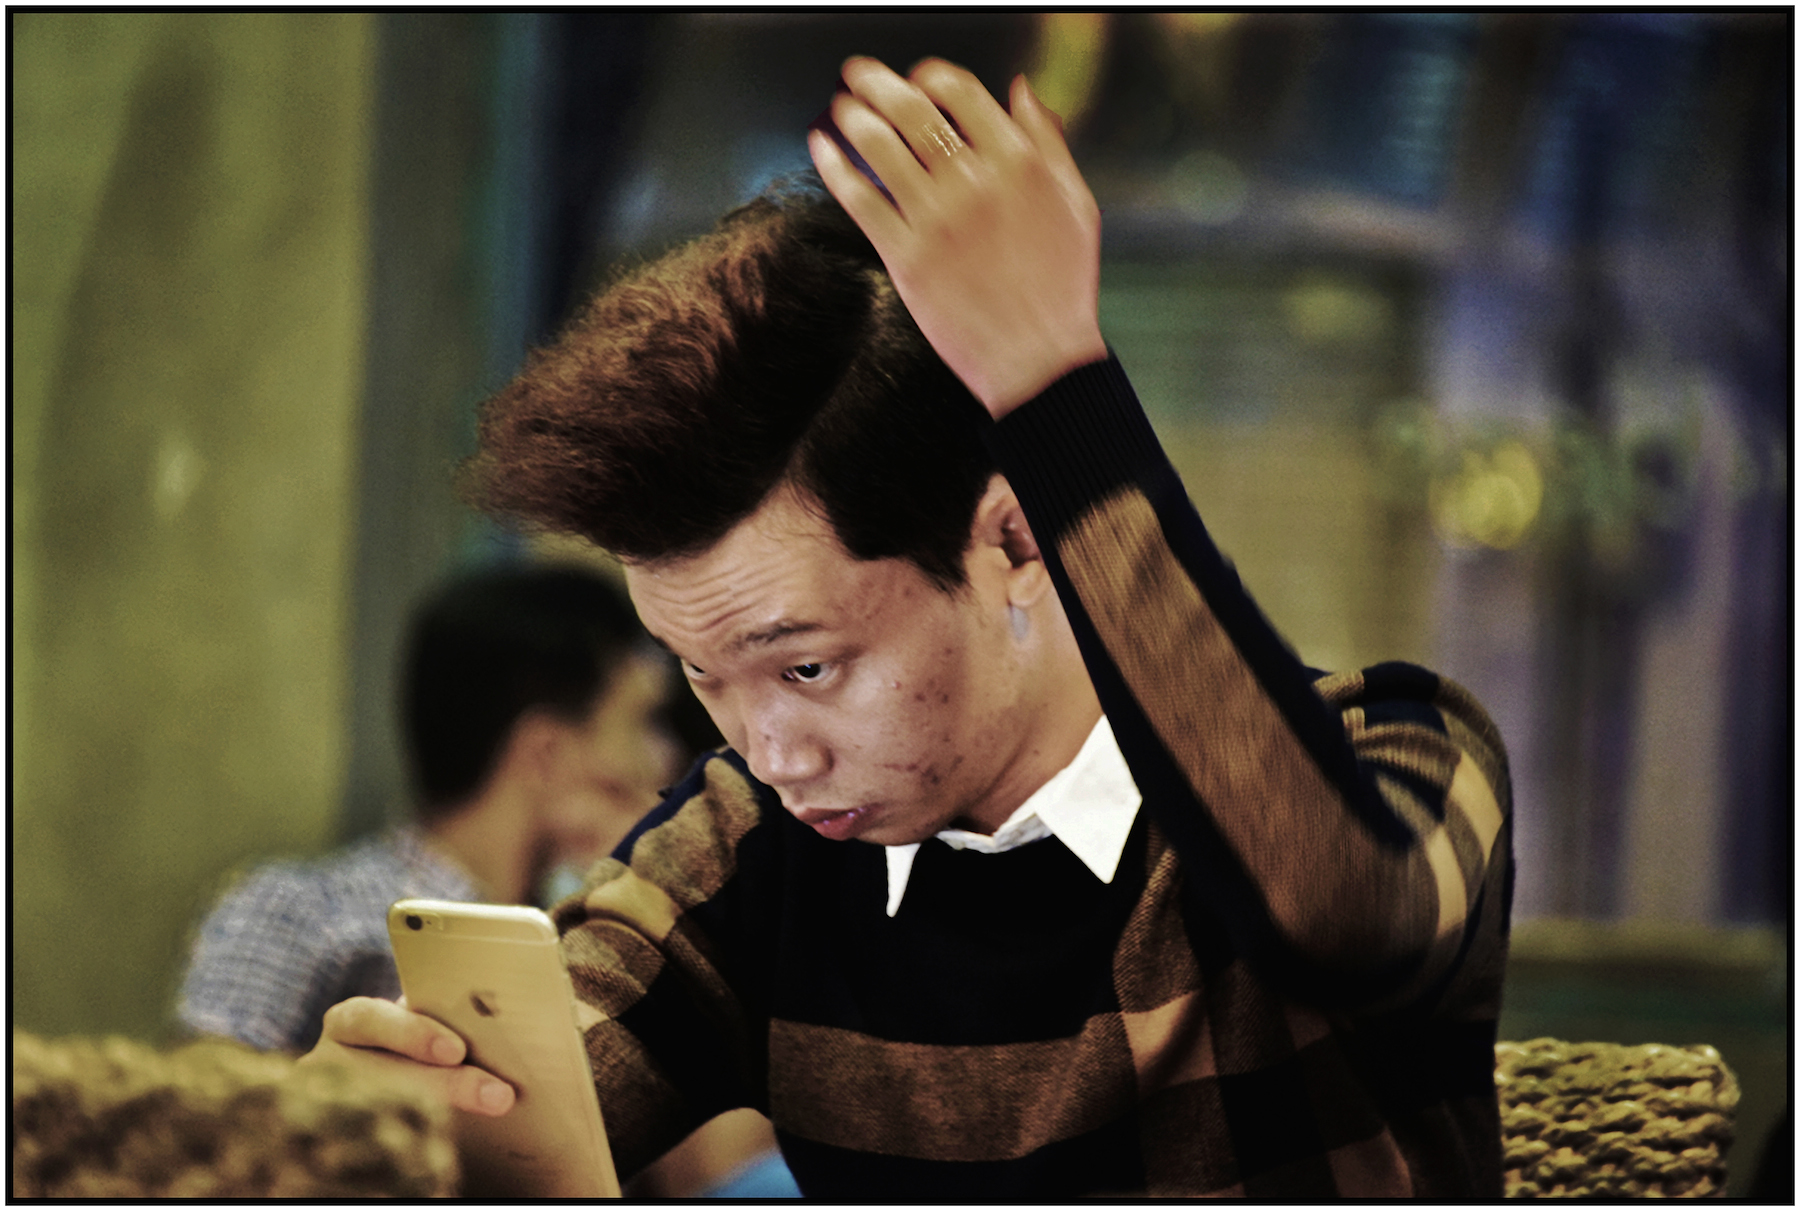  Young man primps using his smart phone, Caffe Bene, Saigon/HCMC, Dec. 2015. #5904 